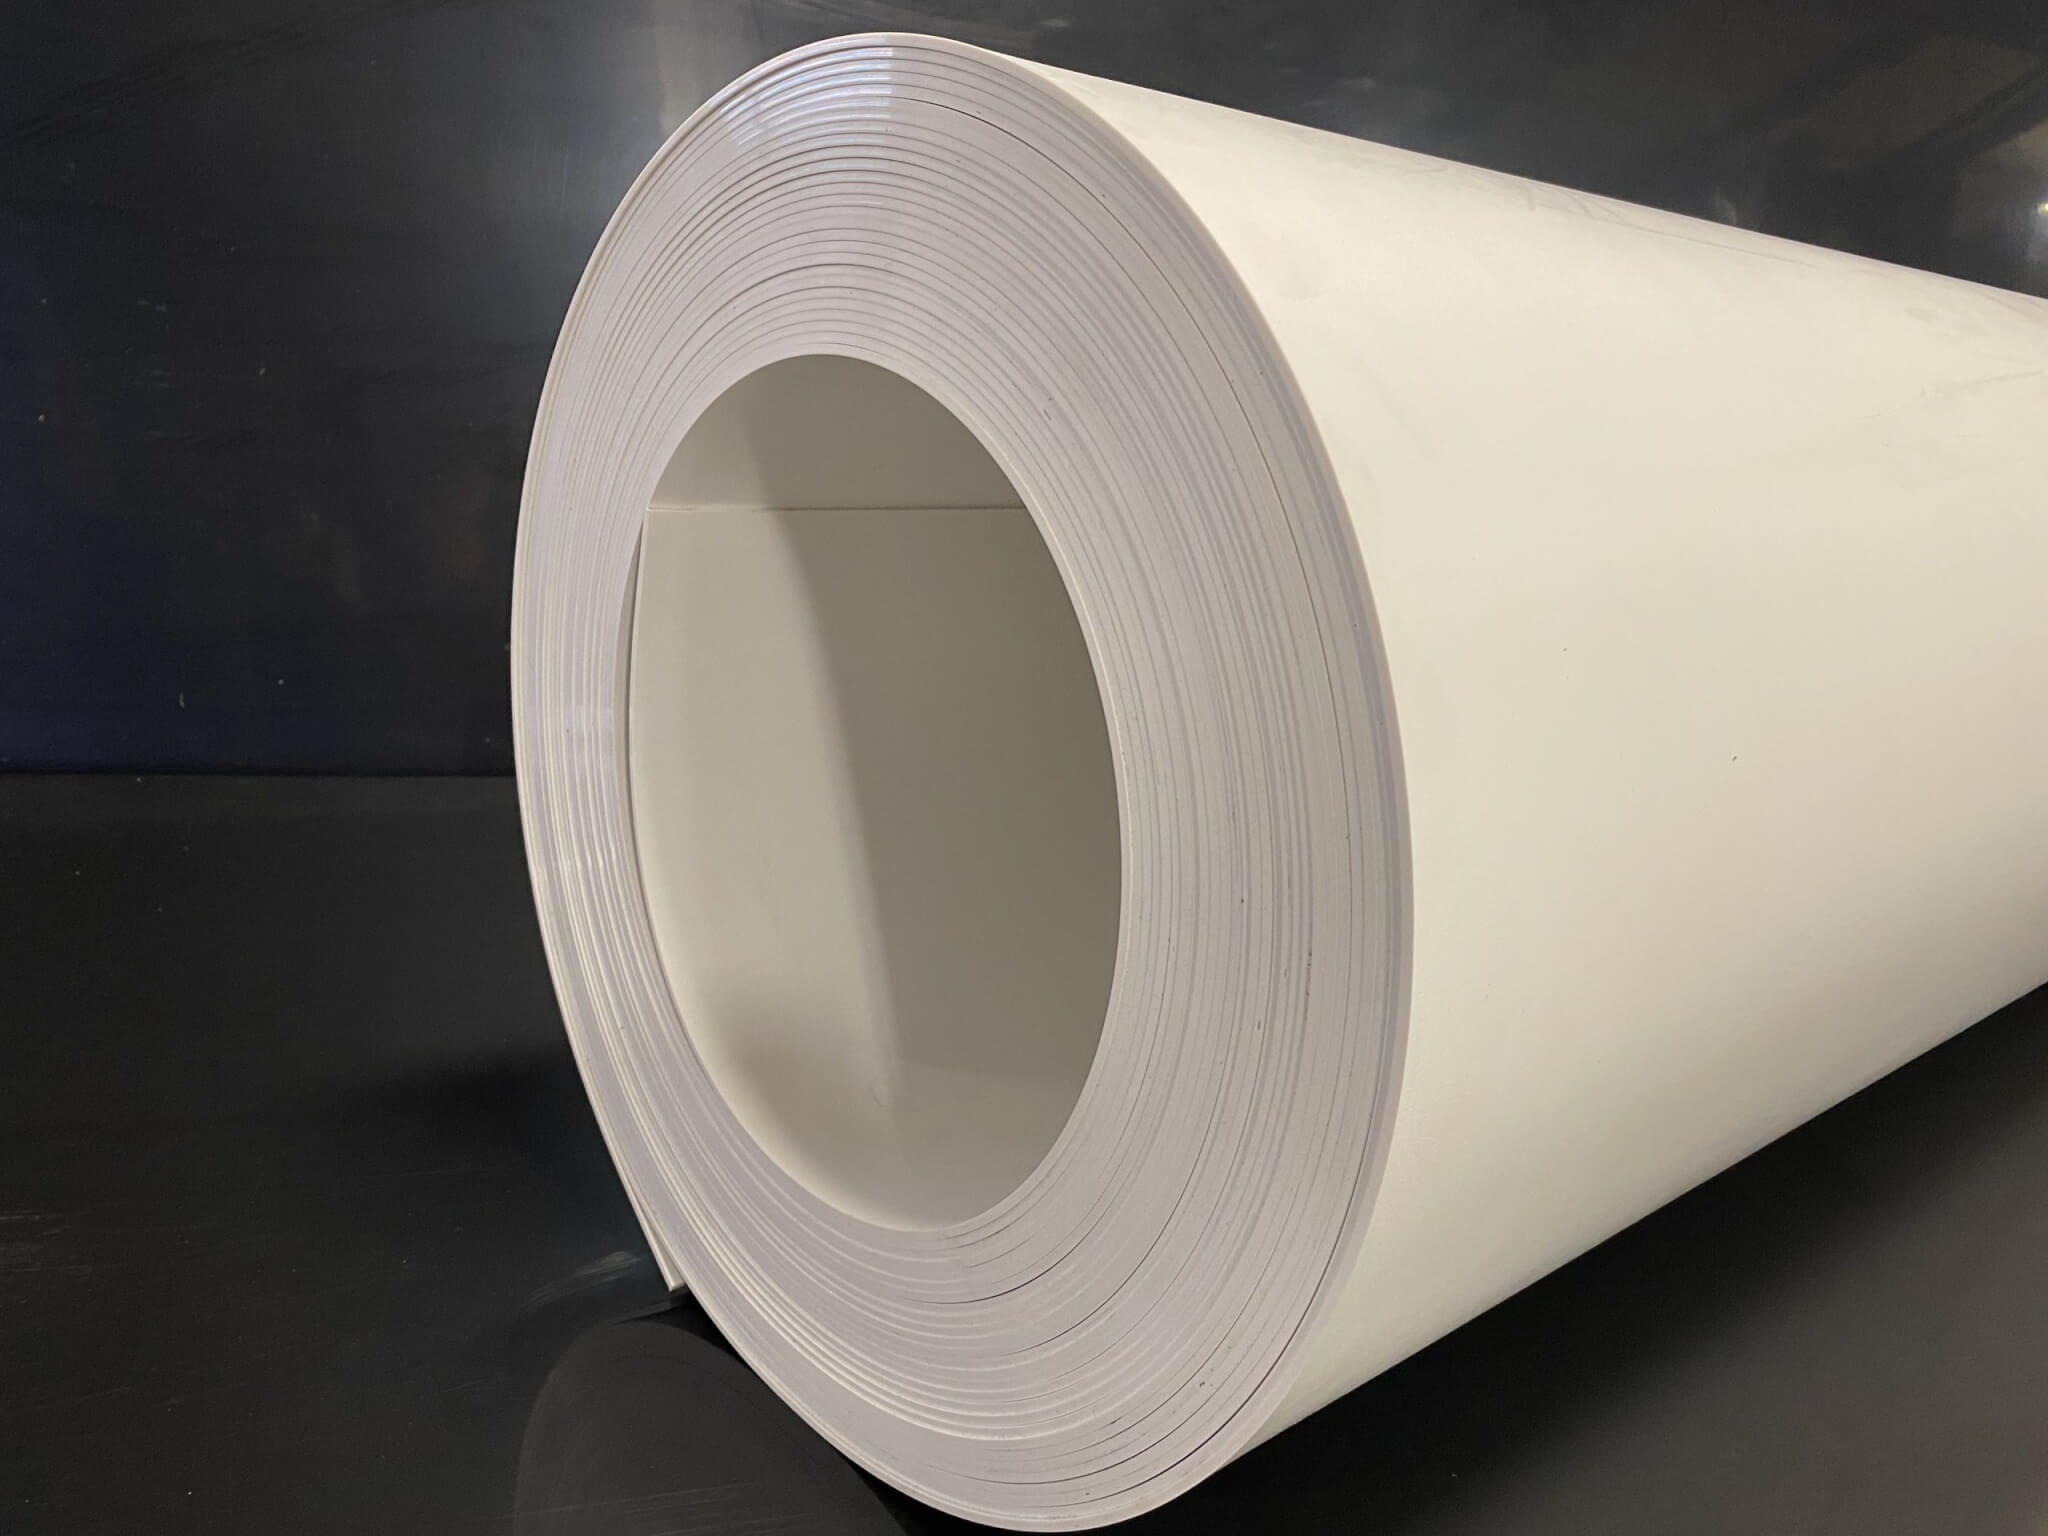 White HDPE Plastic Sheet